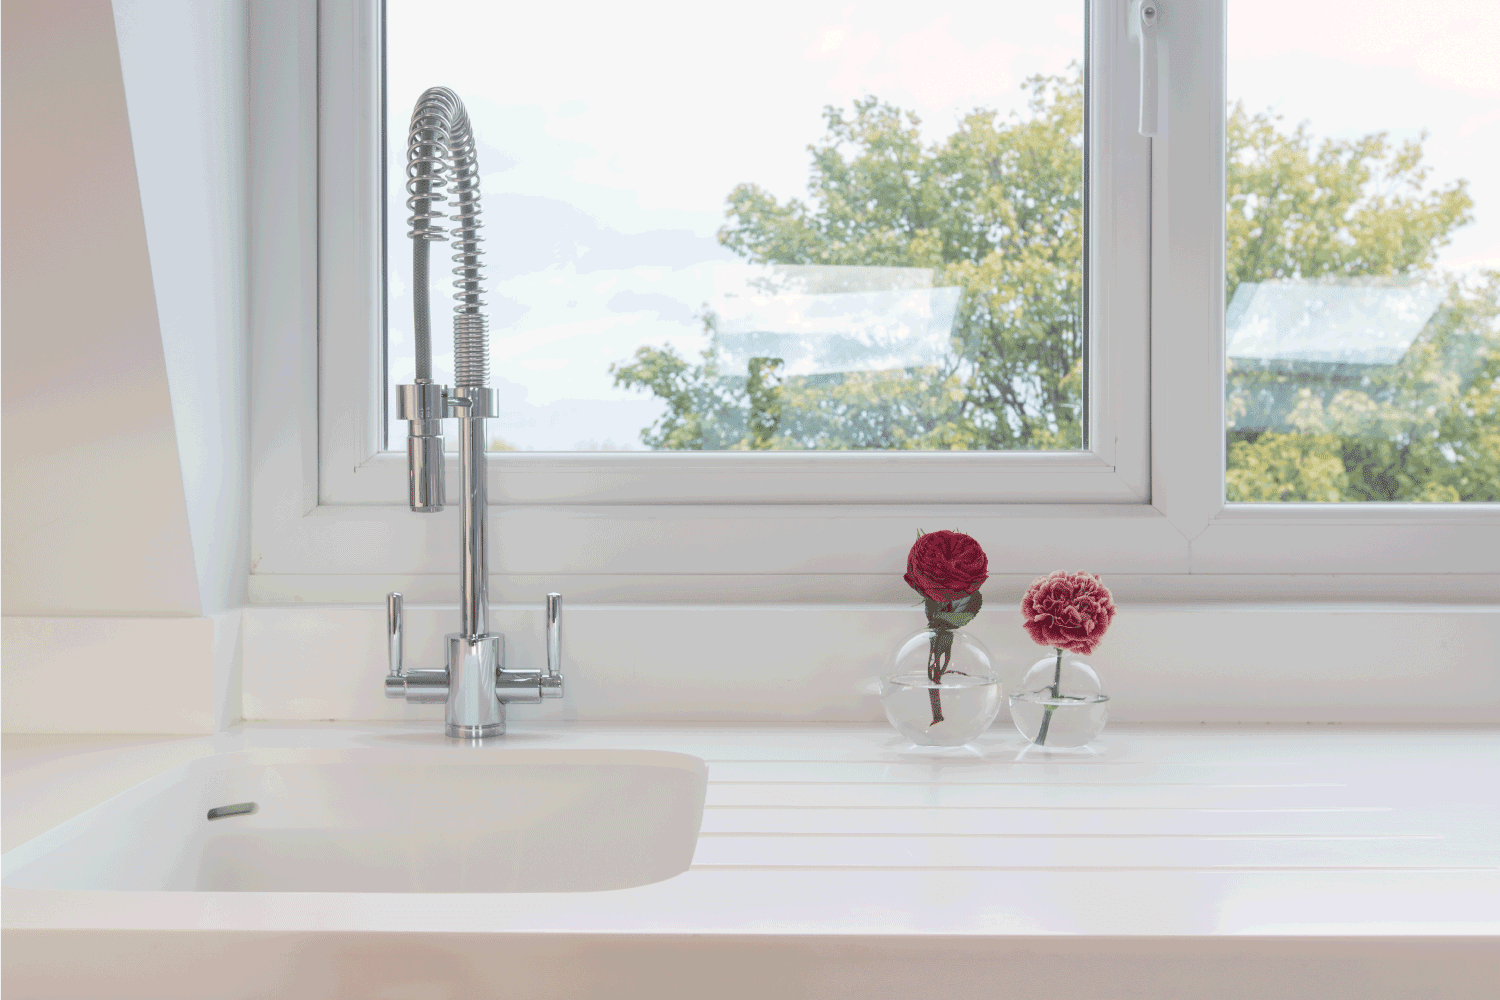 white kitchen sink on white countertop with window view